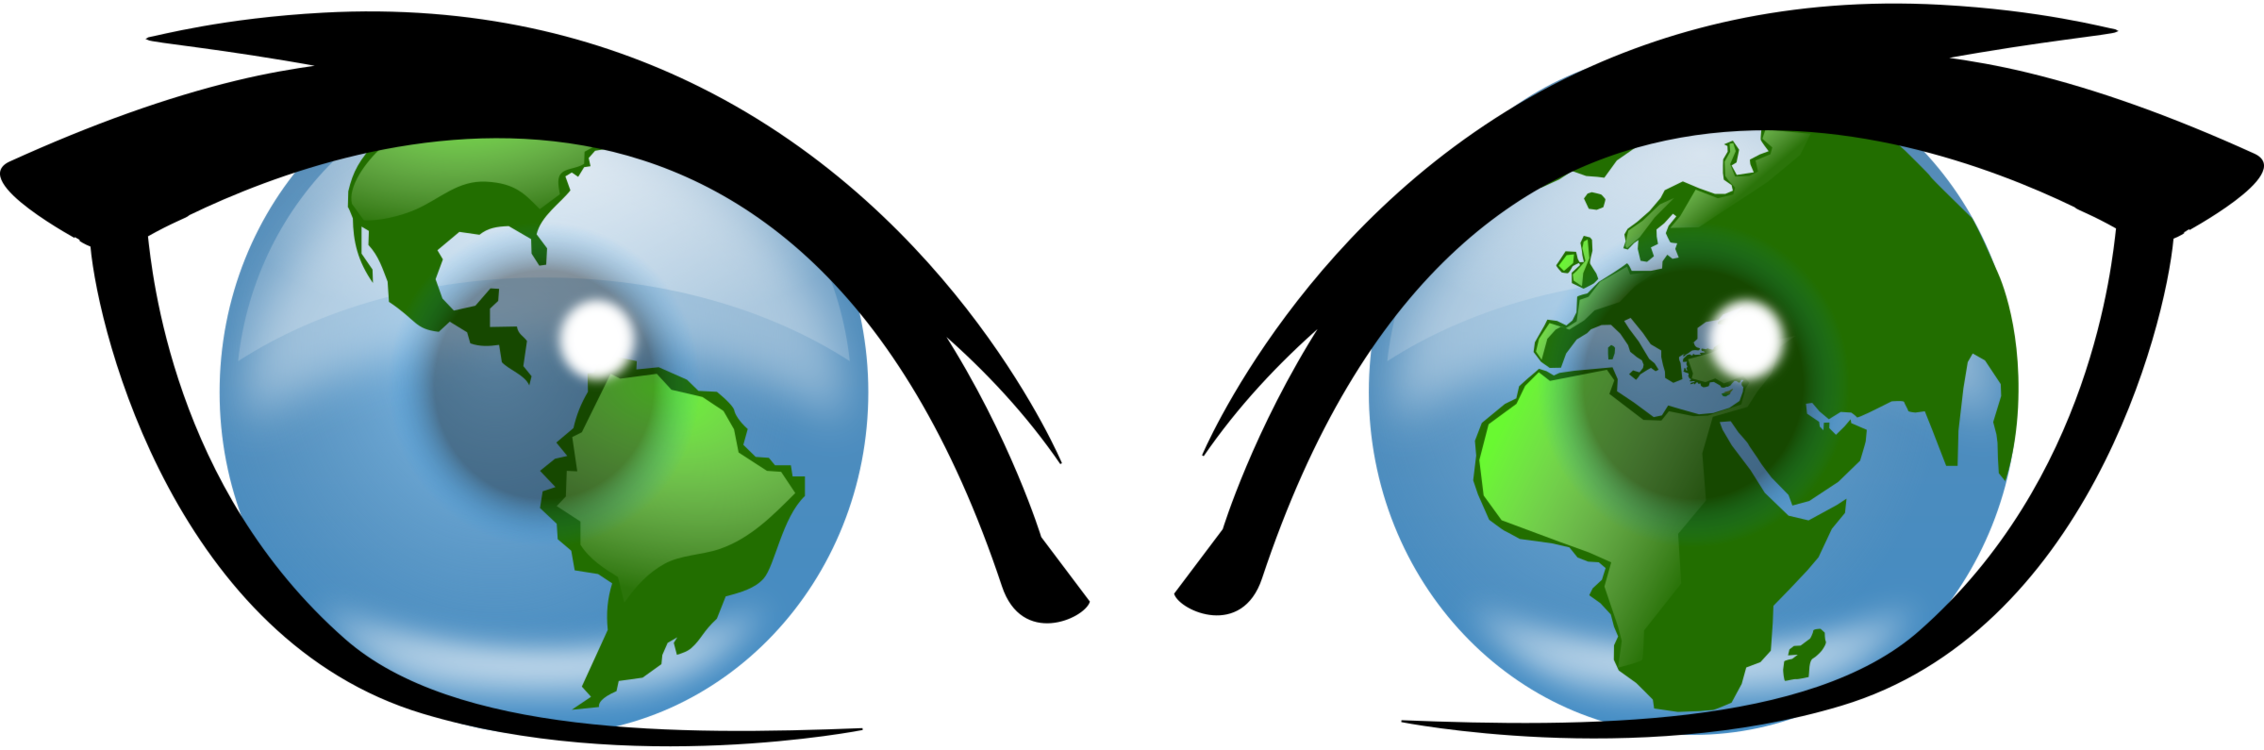 Organism,Green,Globe